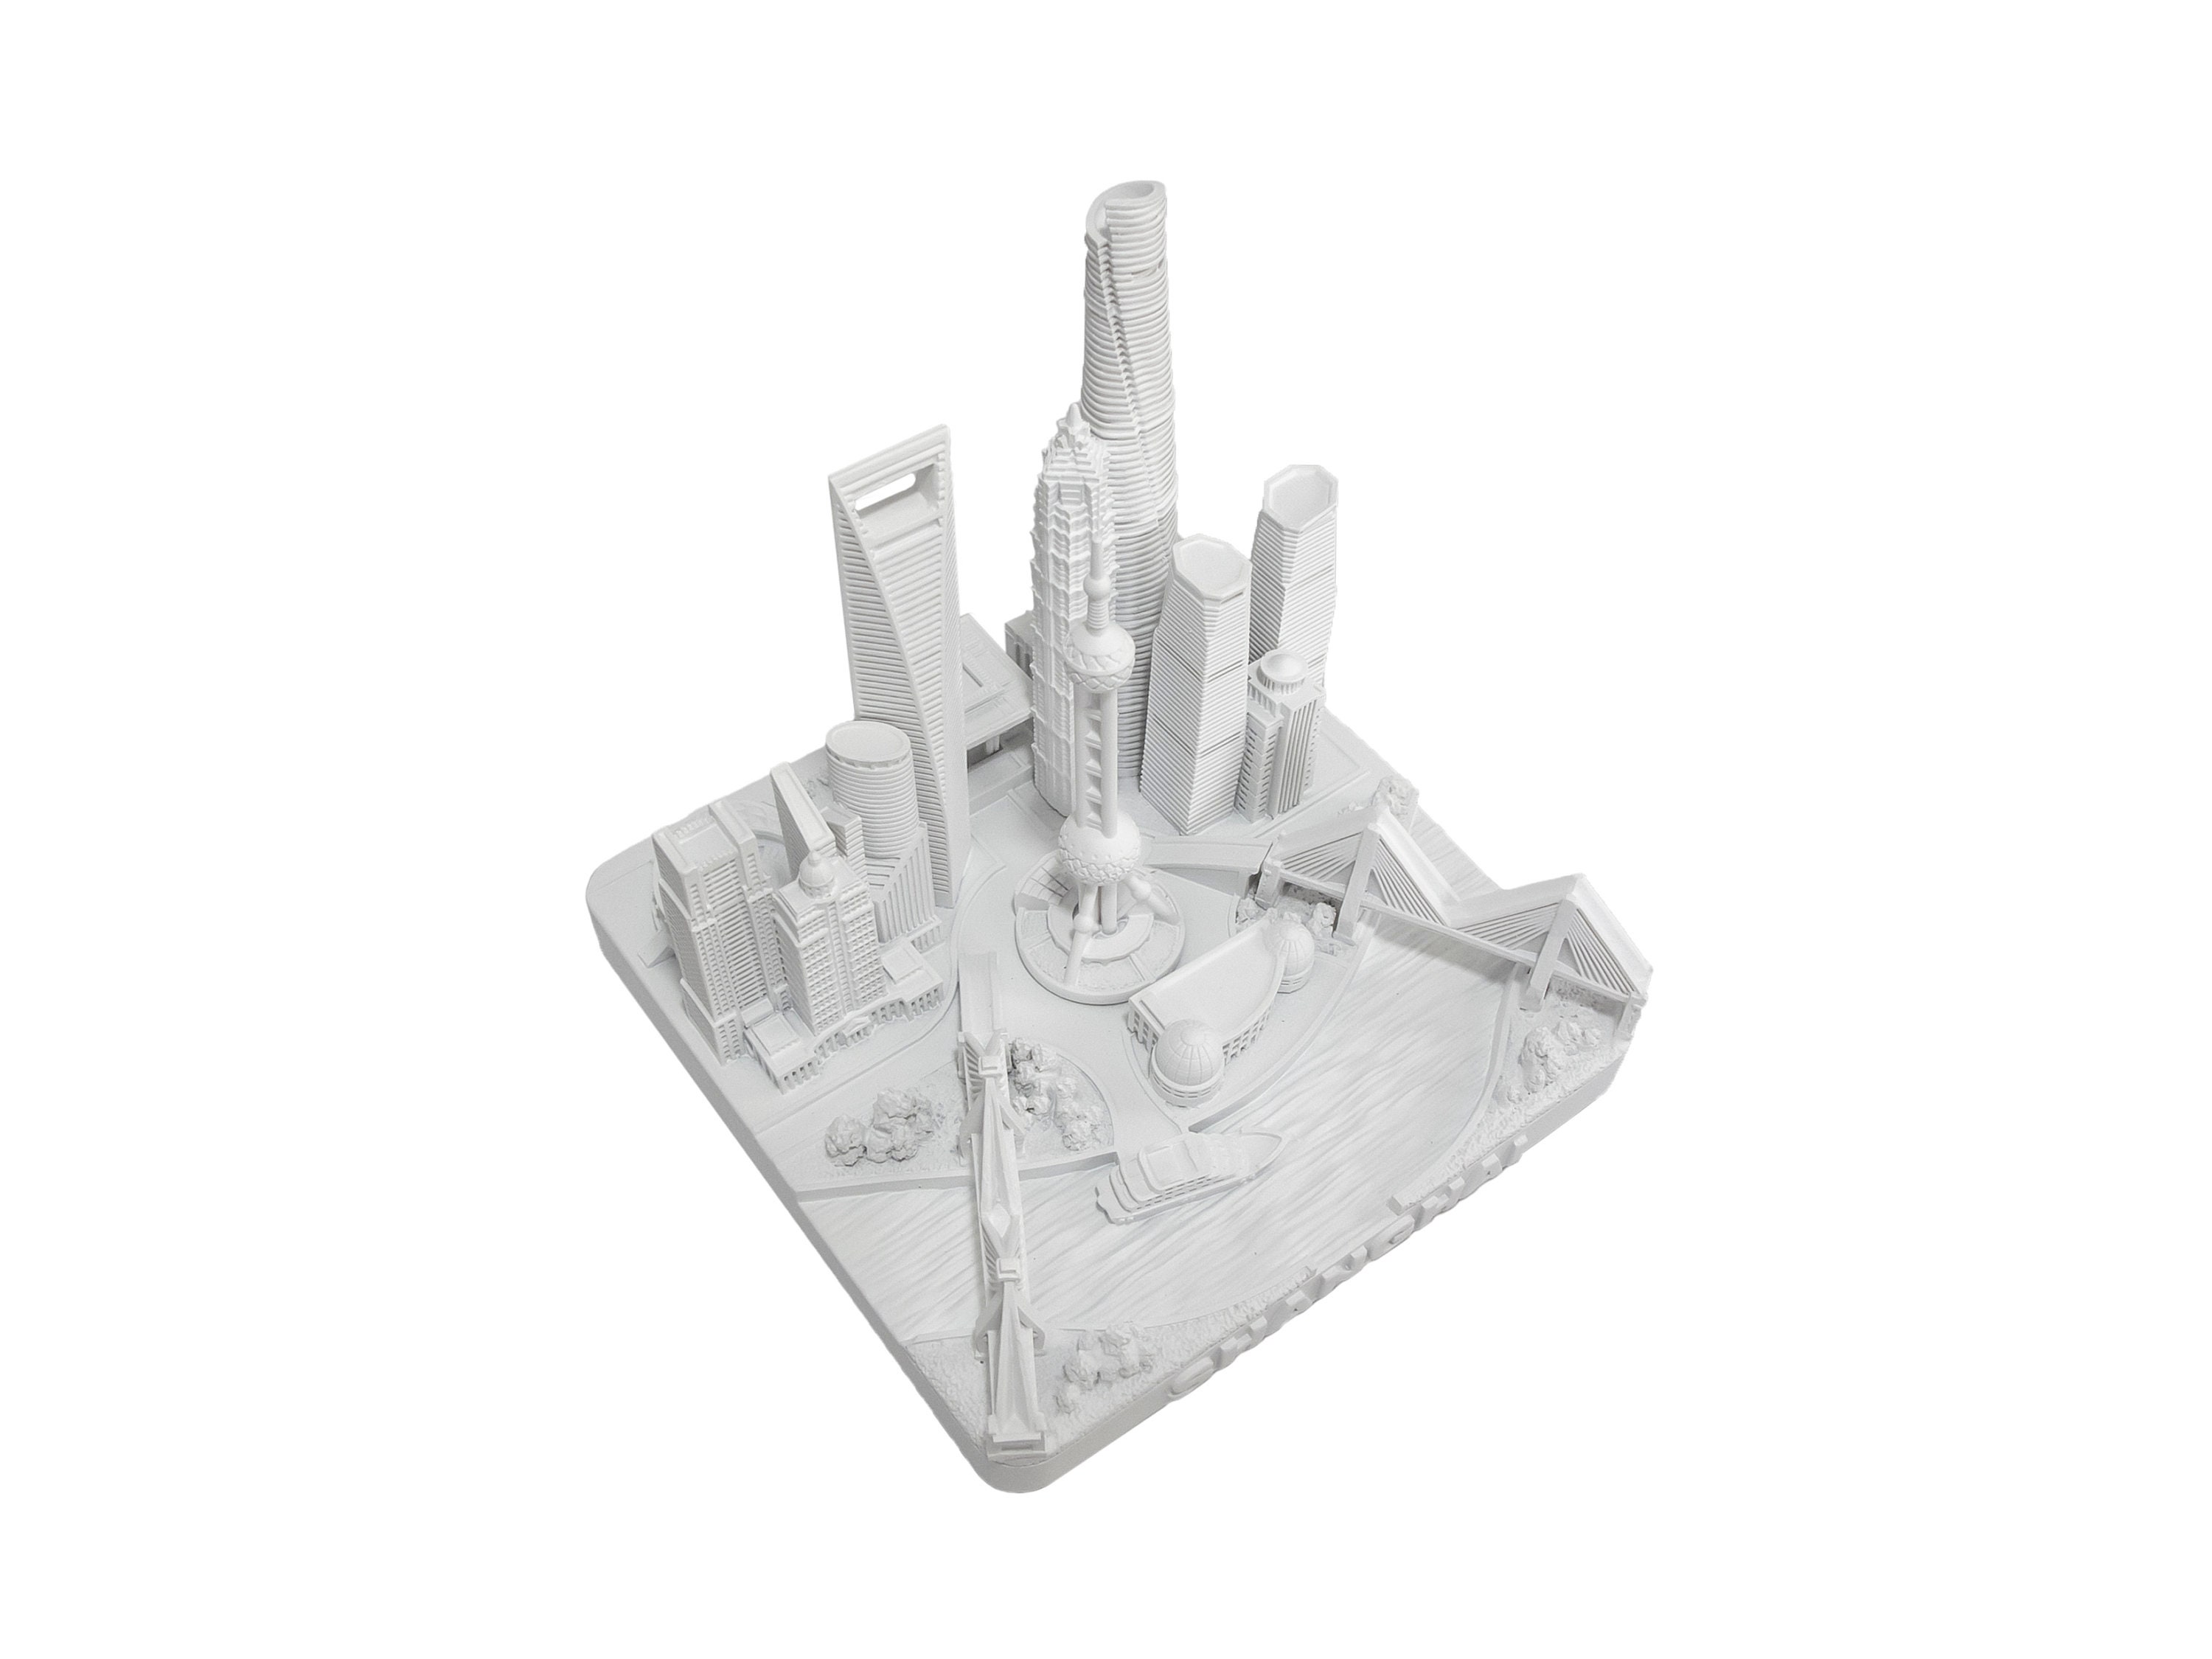 ZIZO Chicago City Skyline Landmark 3D Model Silver Souvenir 